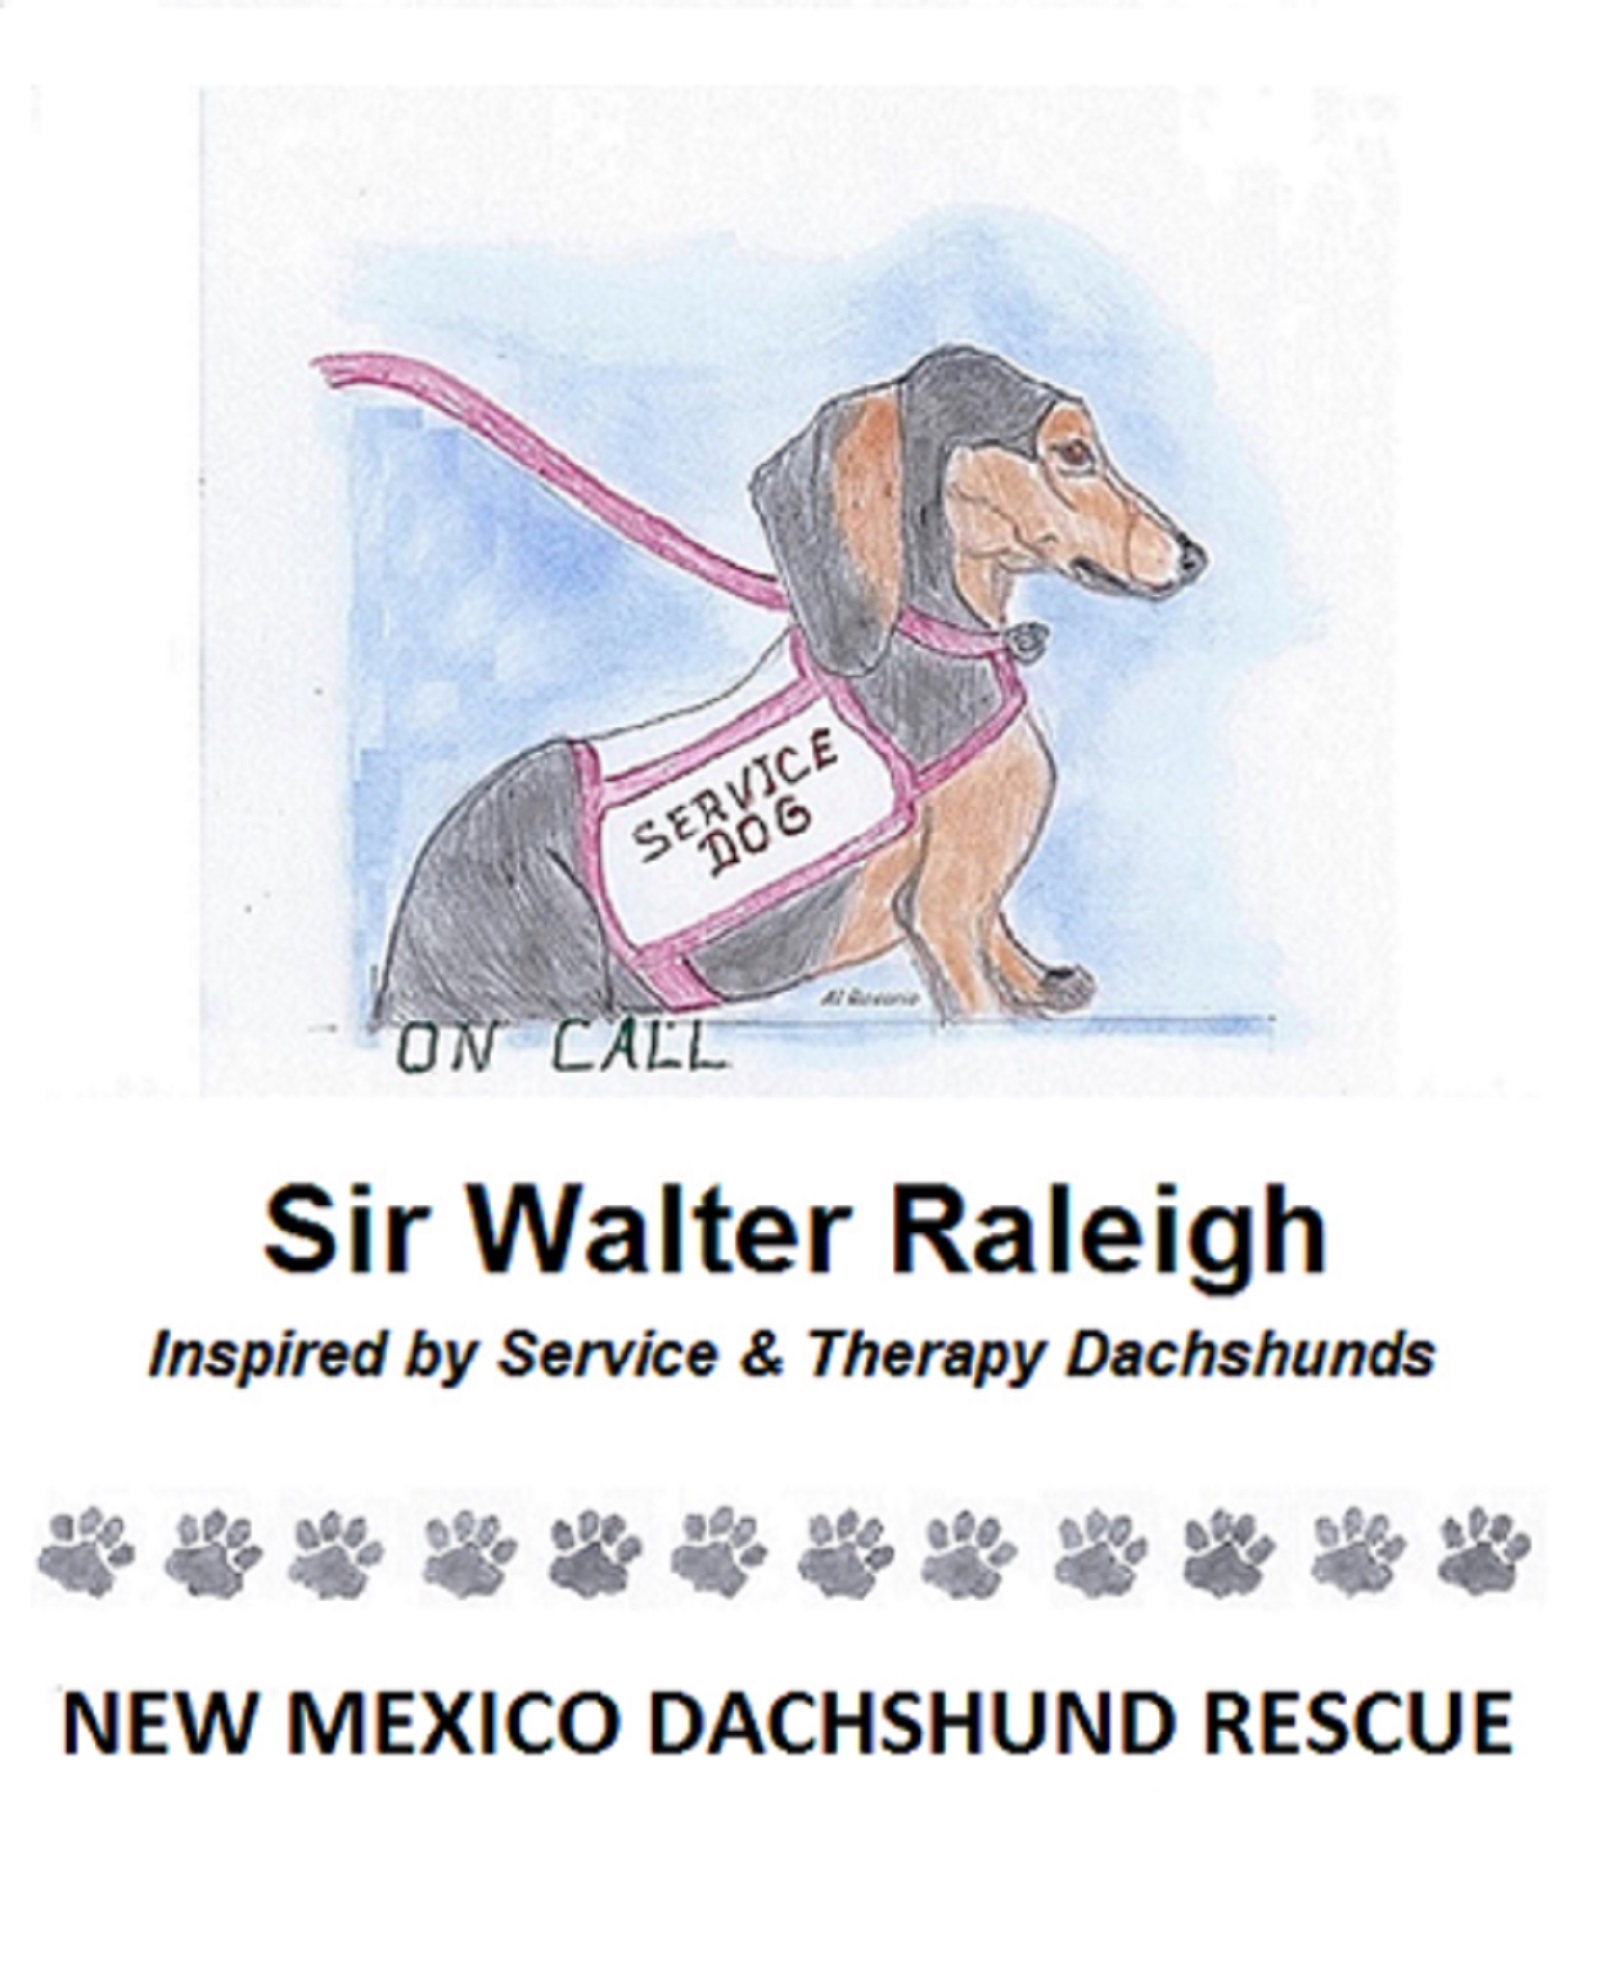 dachshund rehoming